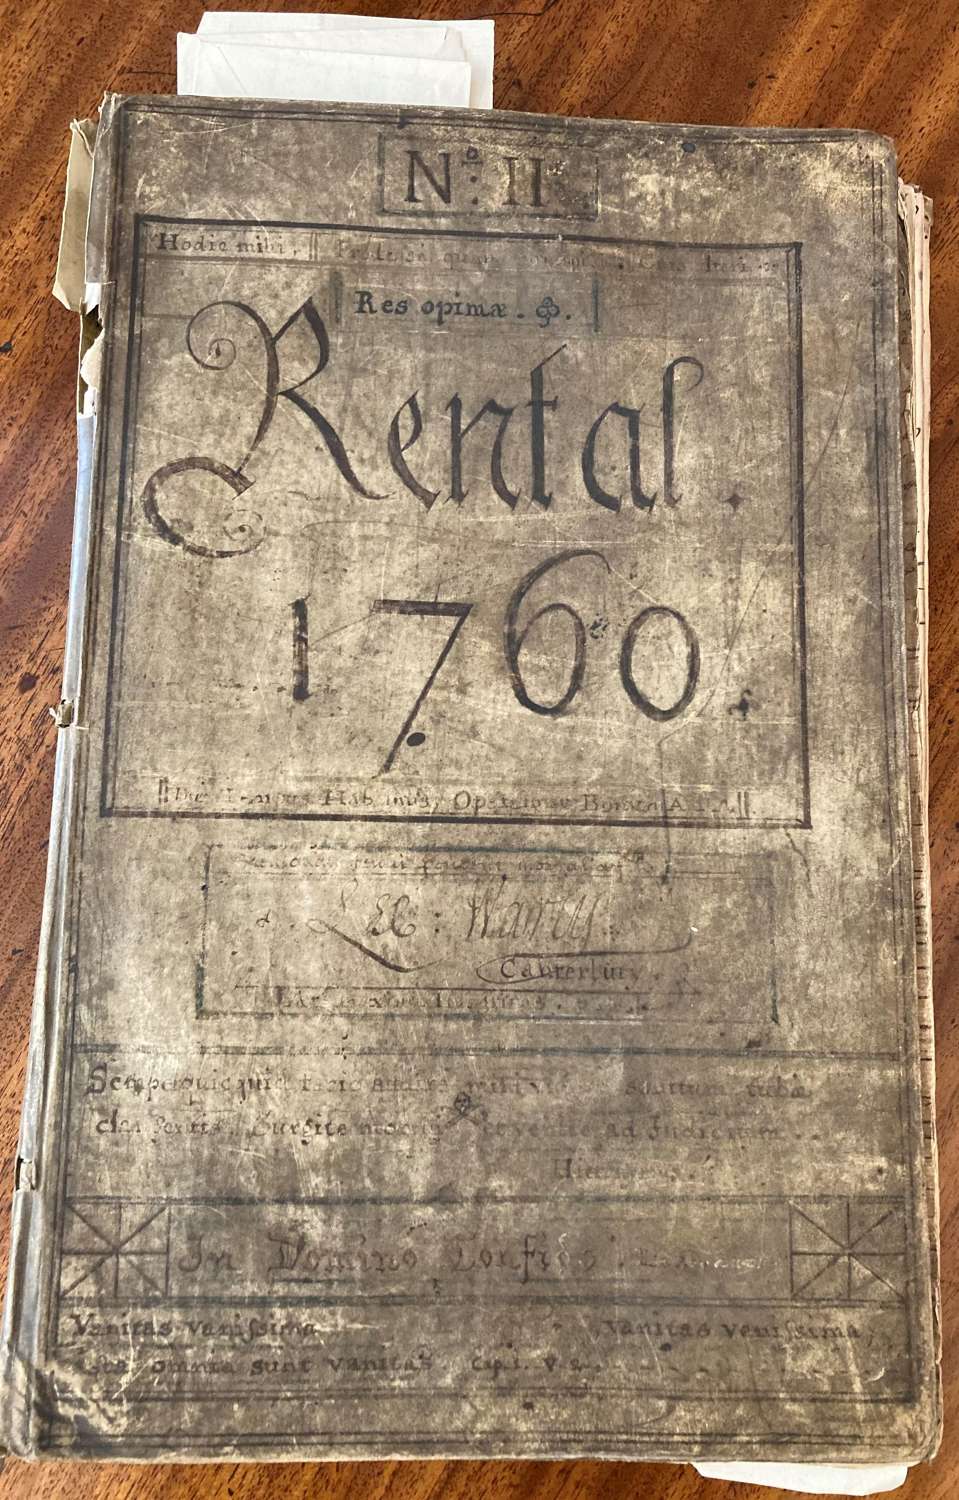 Circa 1760 rent book -Museum collectors piece